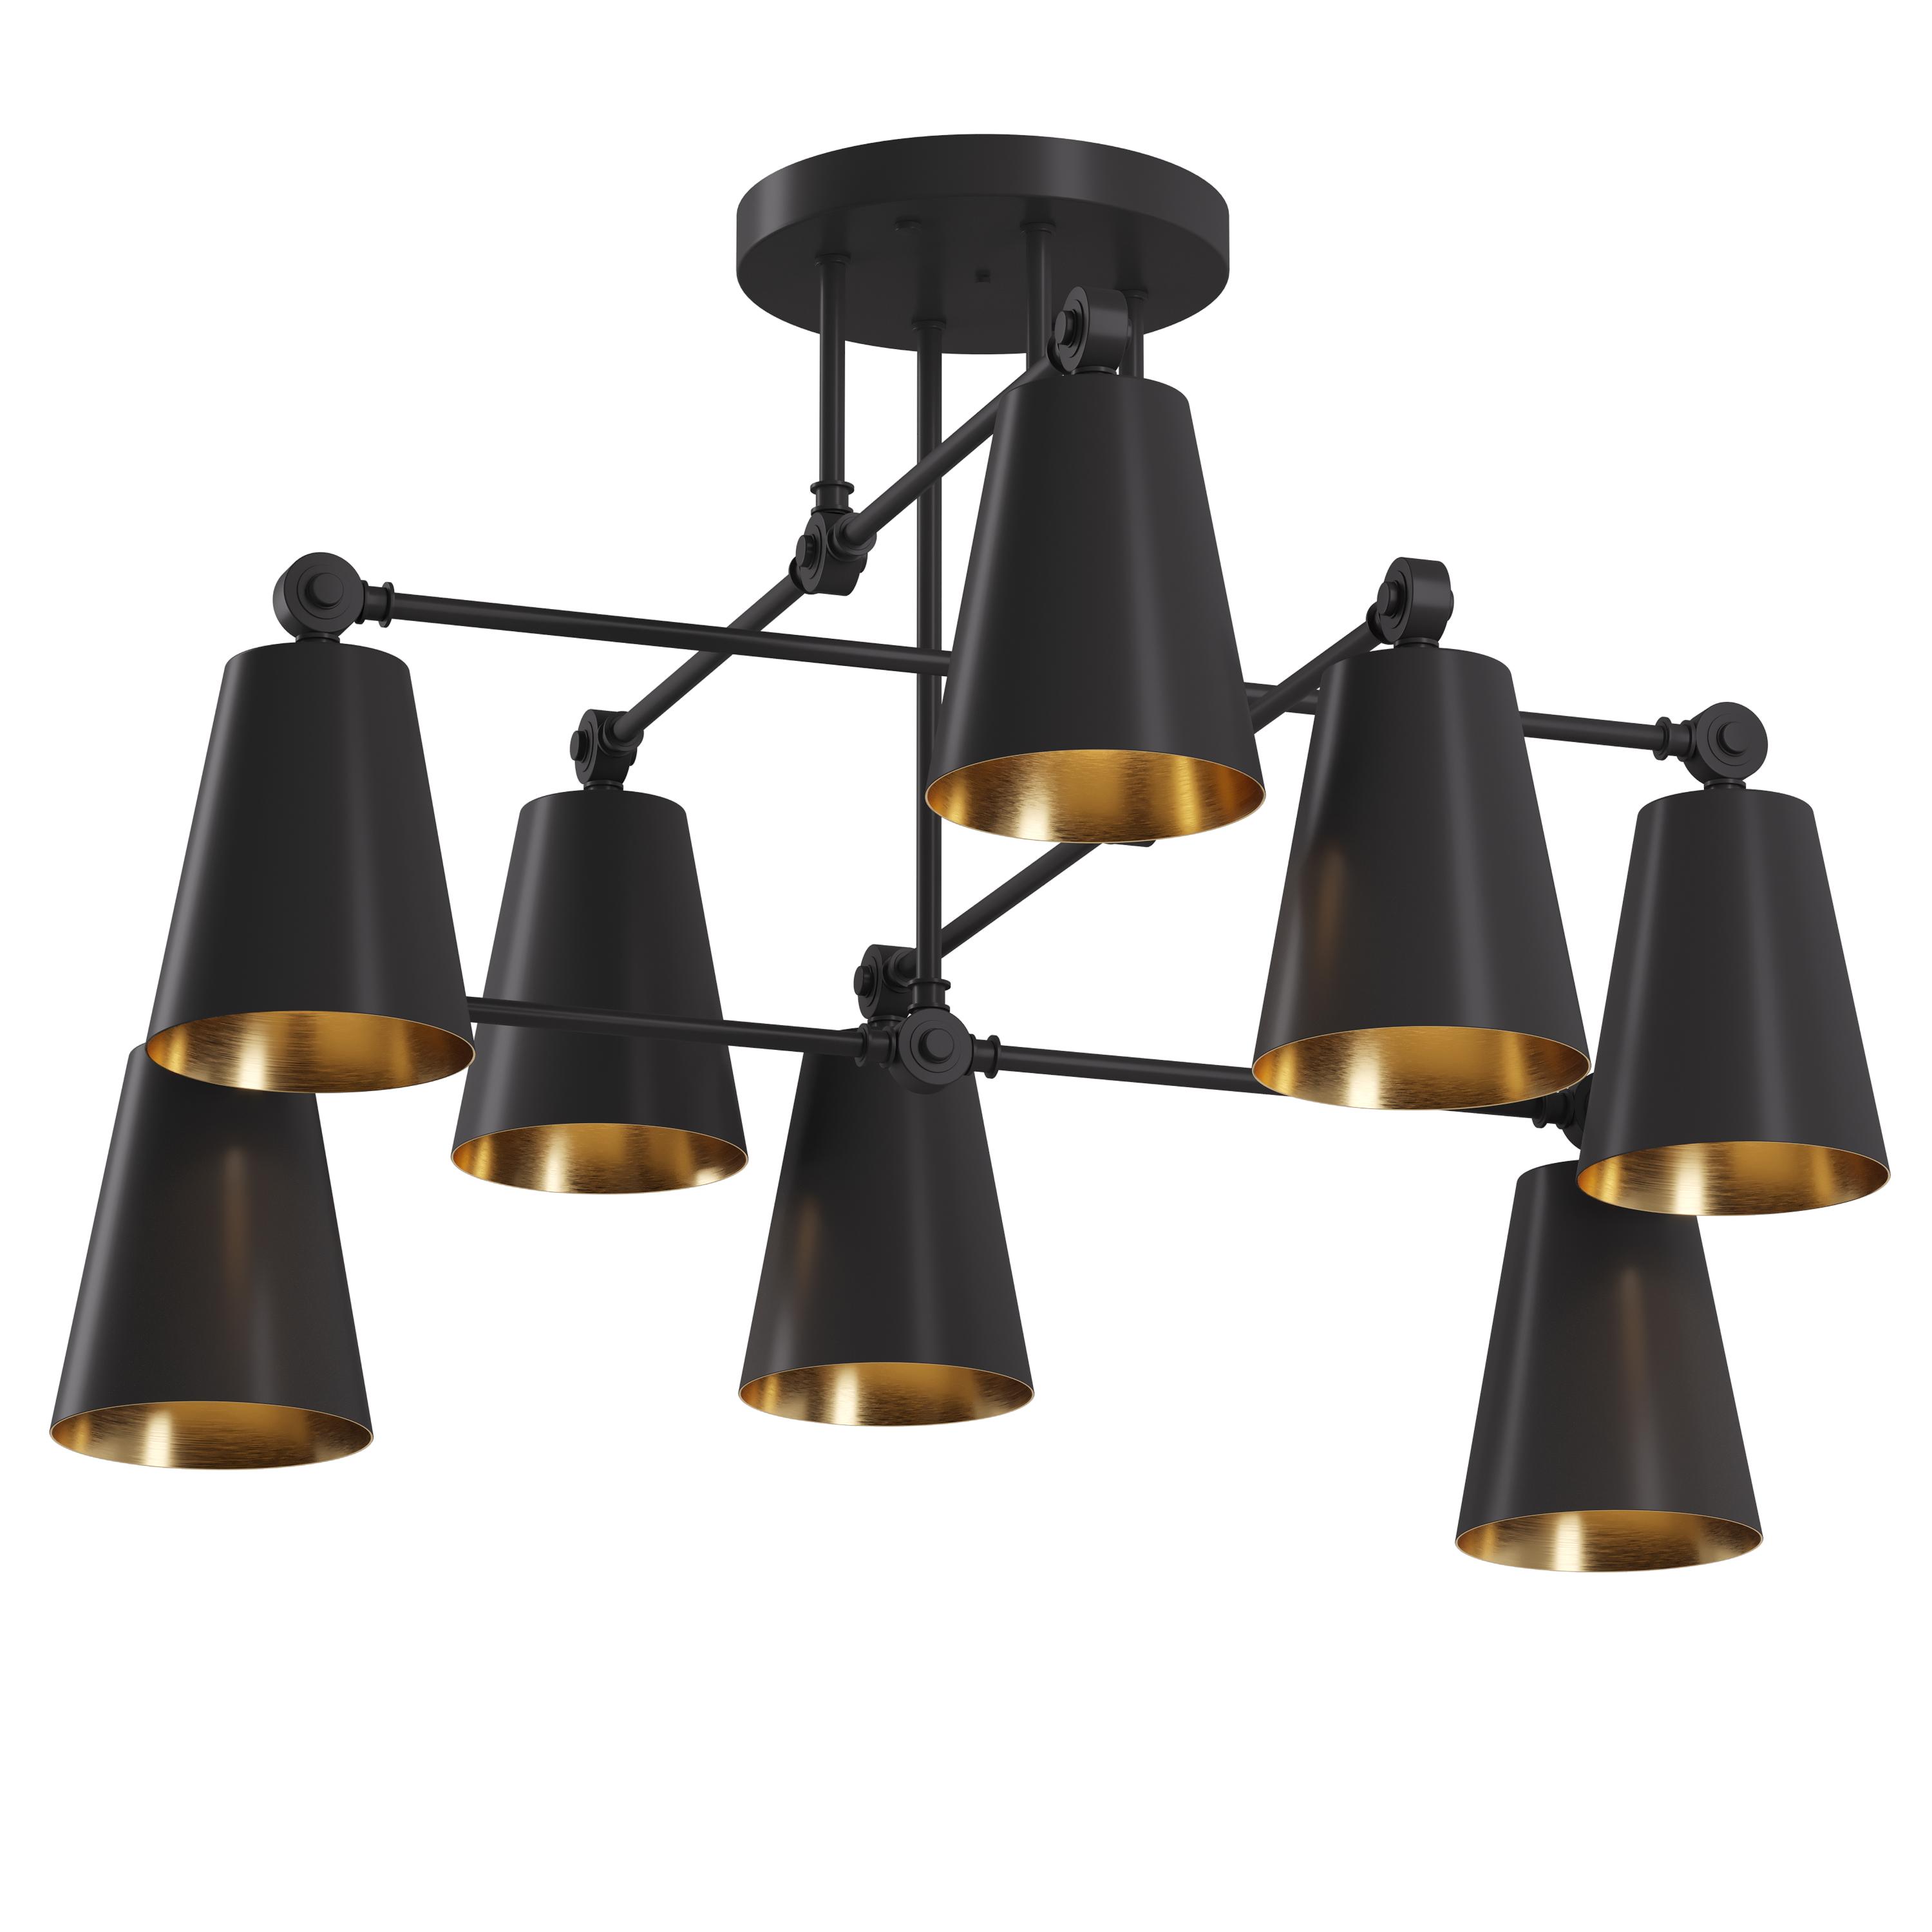 Sia V8 lamp, SKU. 24867 by Pikartlights 3d model